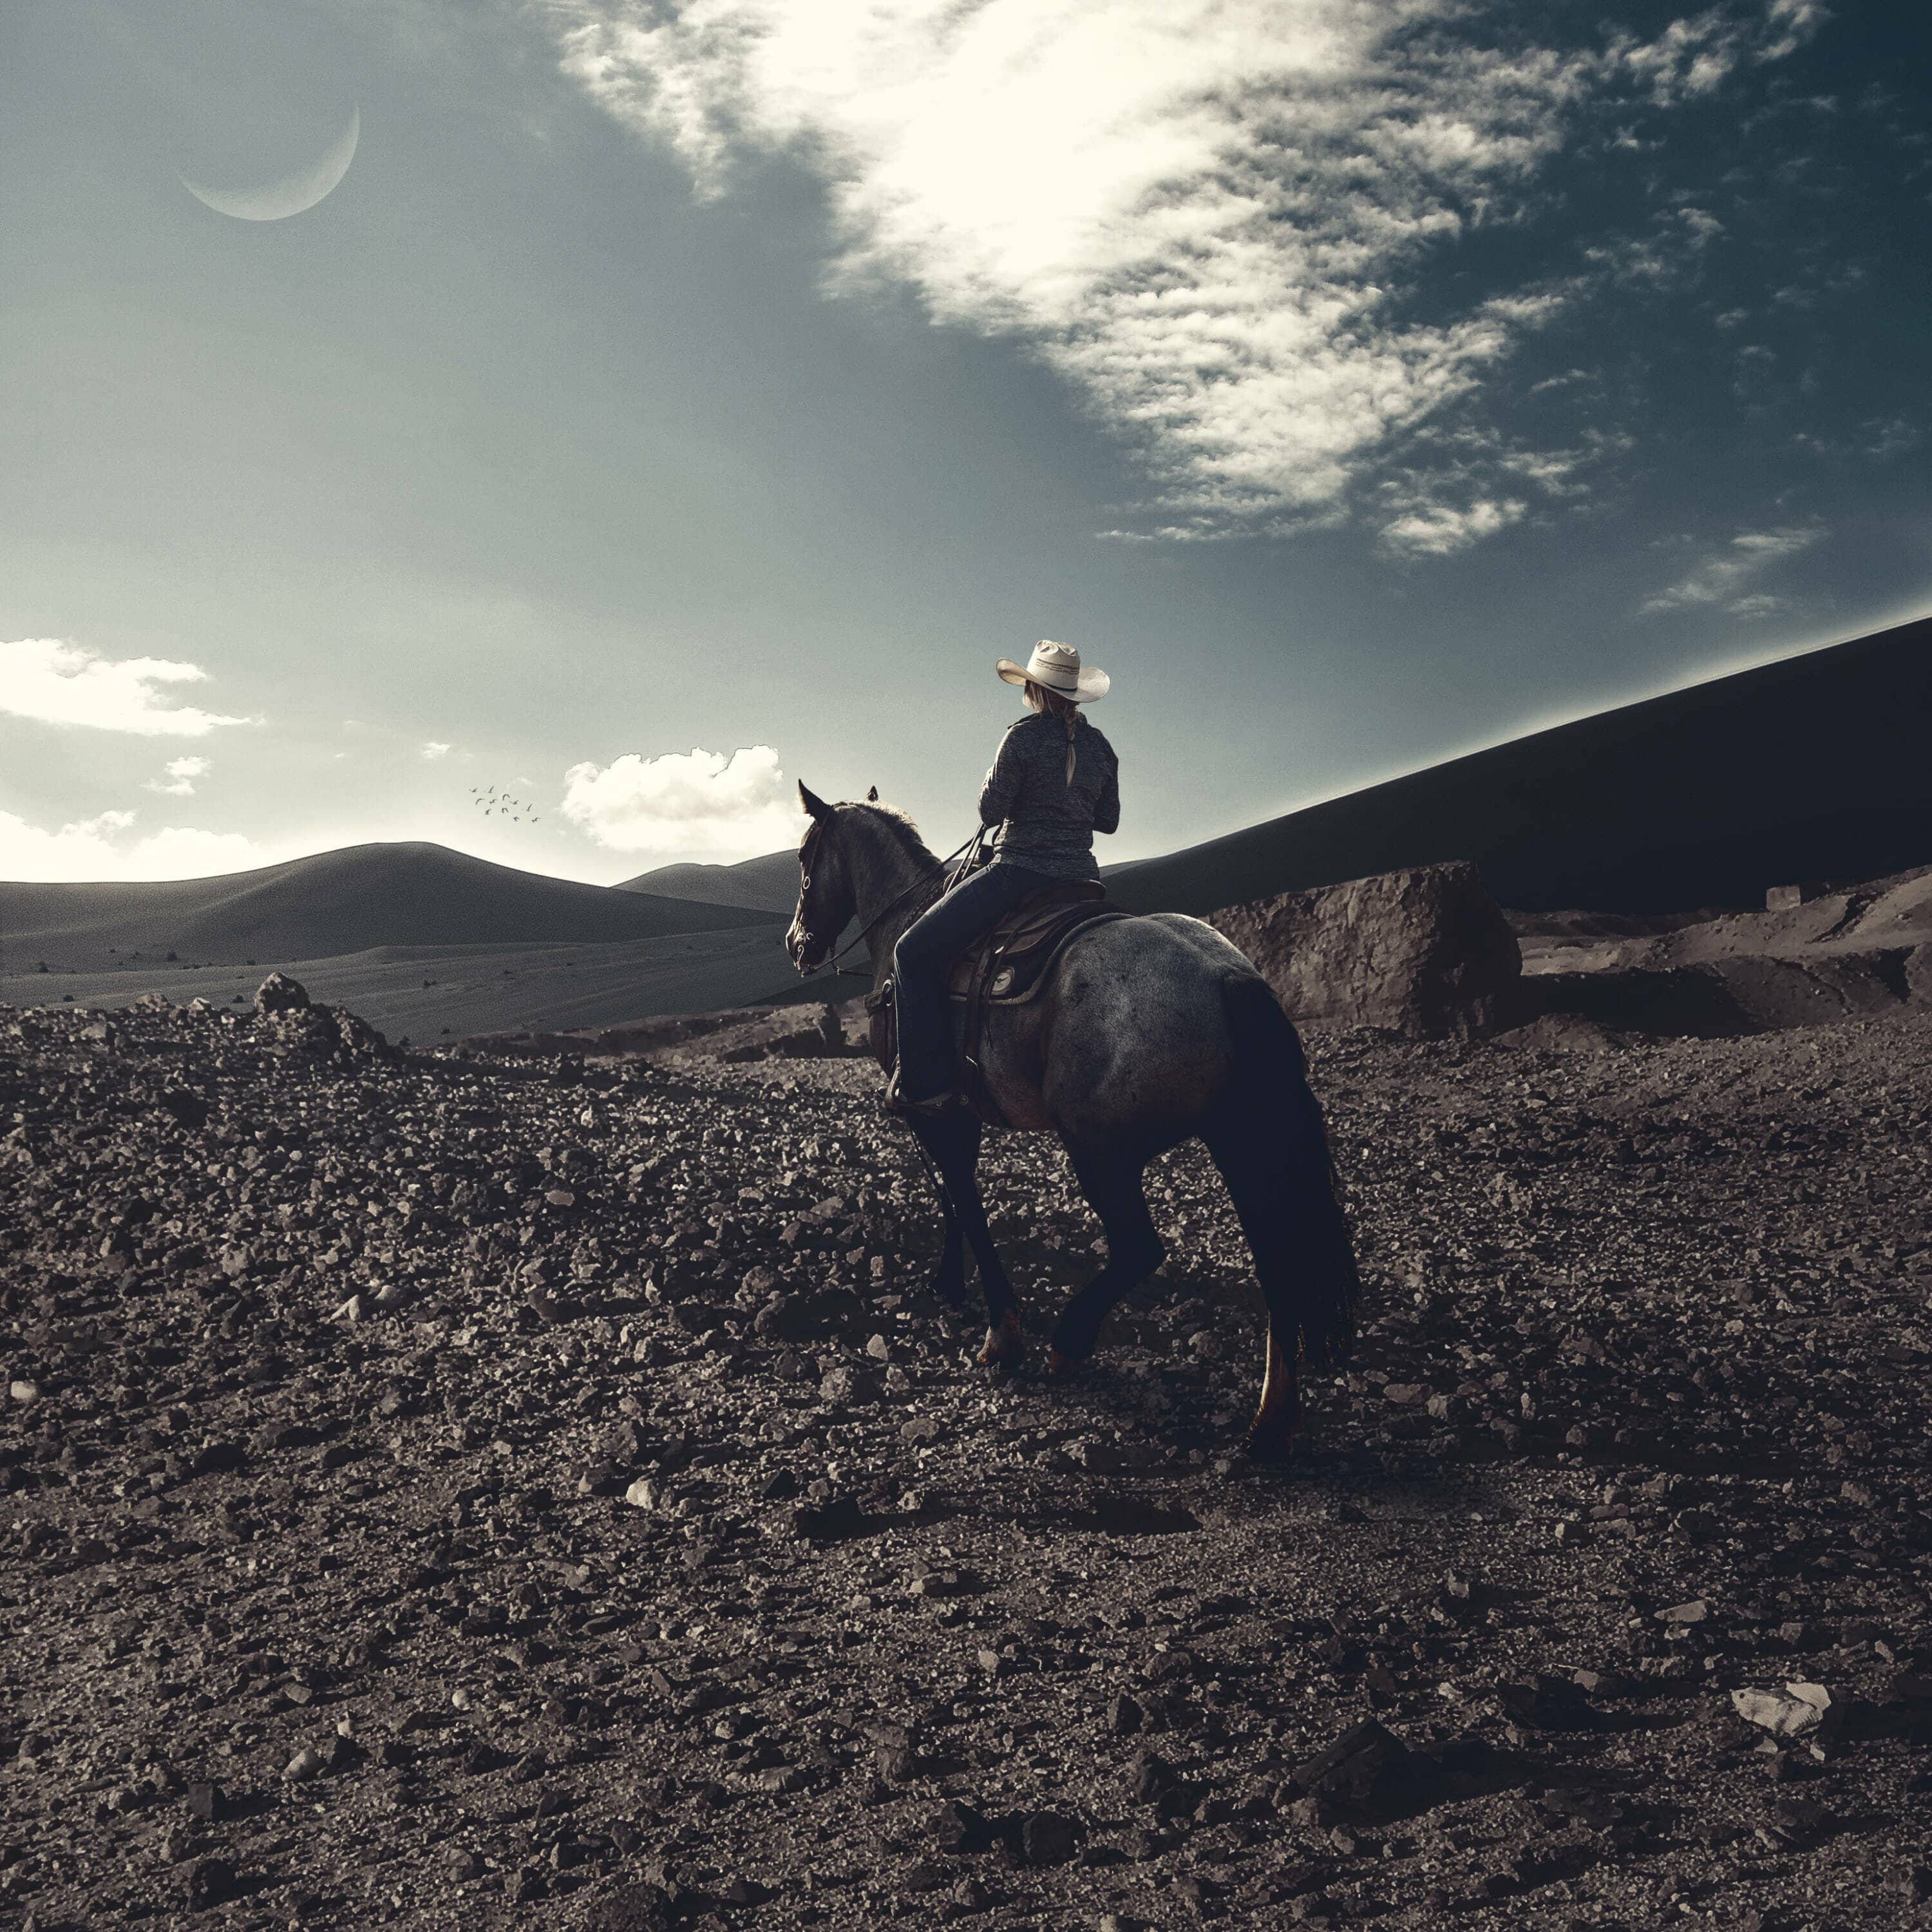 Create a Wild West Photo Manipulation with Photoshop